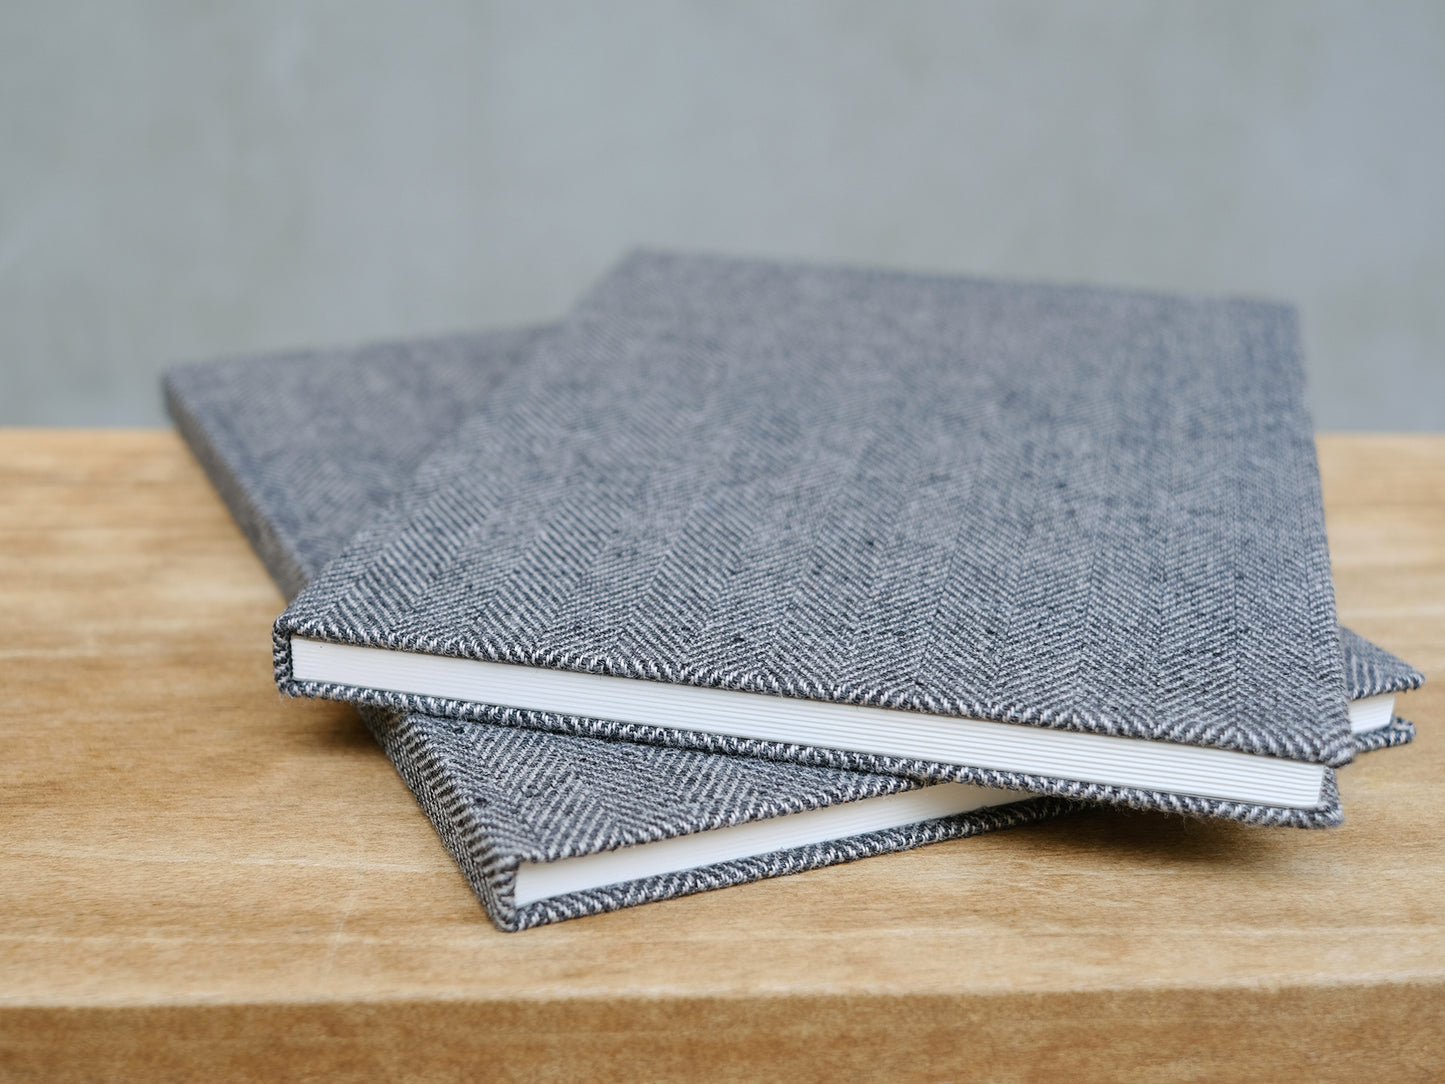 A5 Square Grid Linen Hardcover Notebook - Banshu-ori